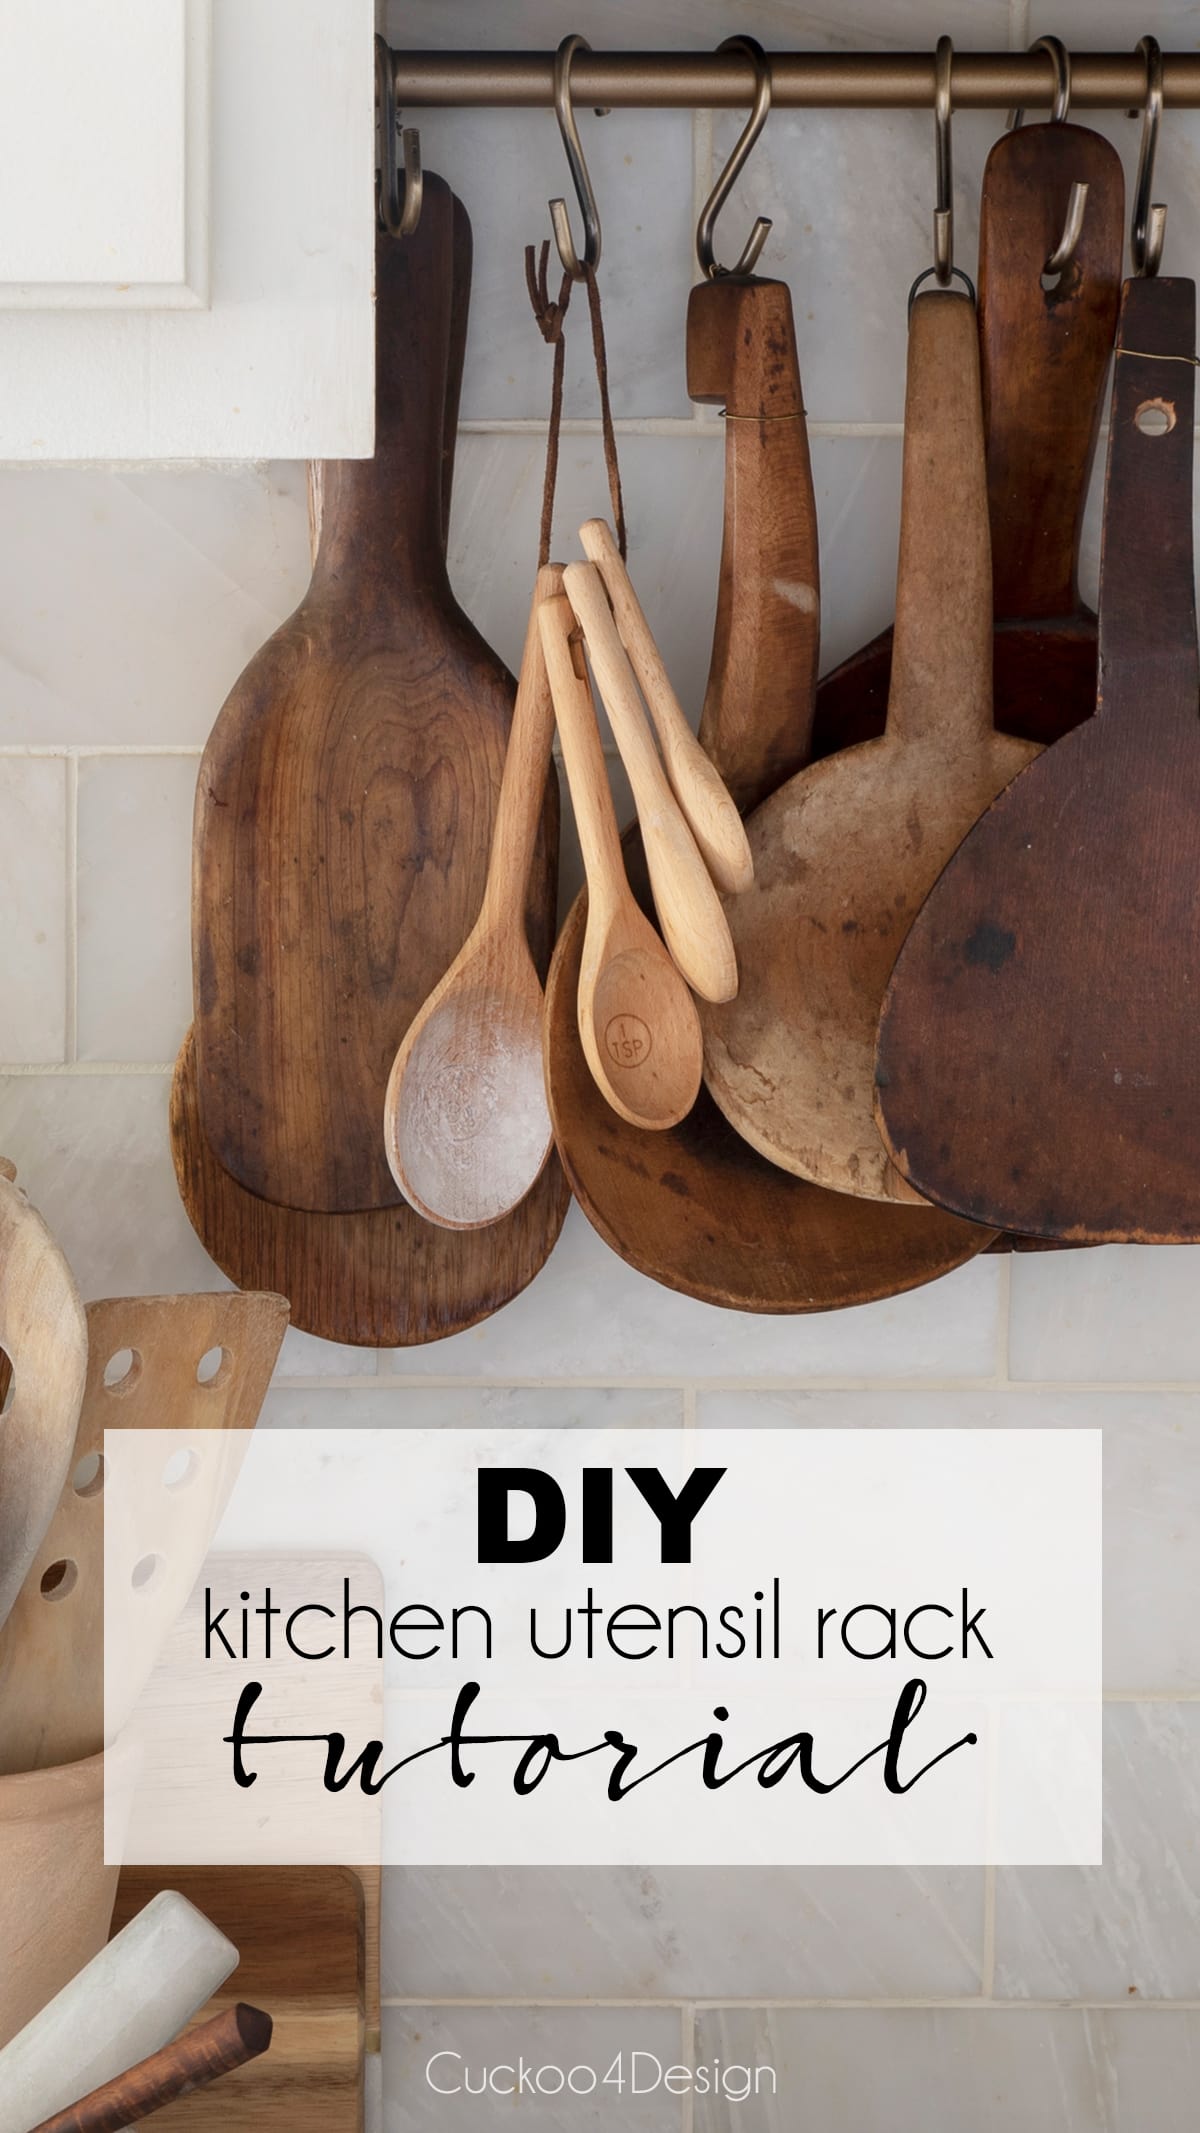 DIY kitchen utensil rack tutorial